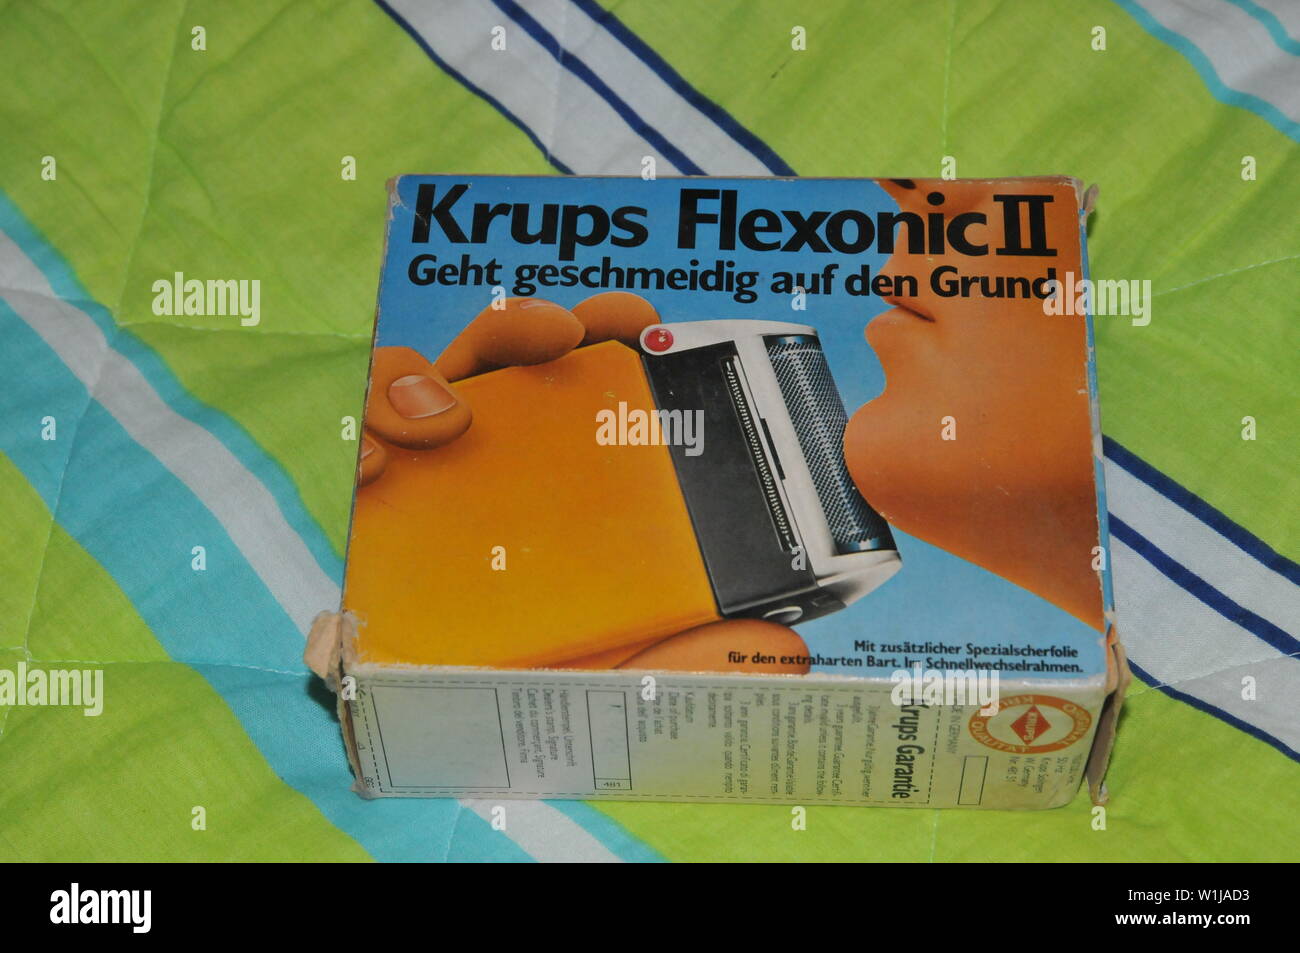 Collectible elektrische Rasierer Krups Flexonic II aus den 60s Stockfoto